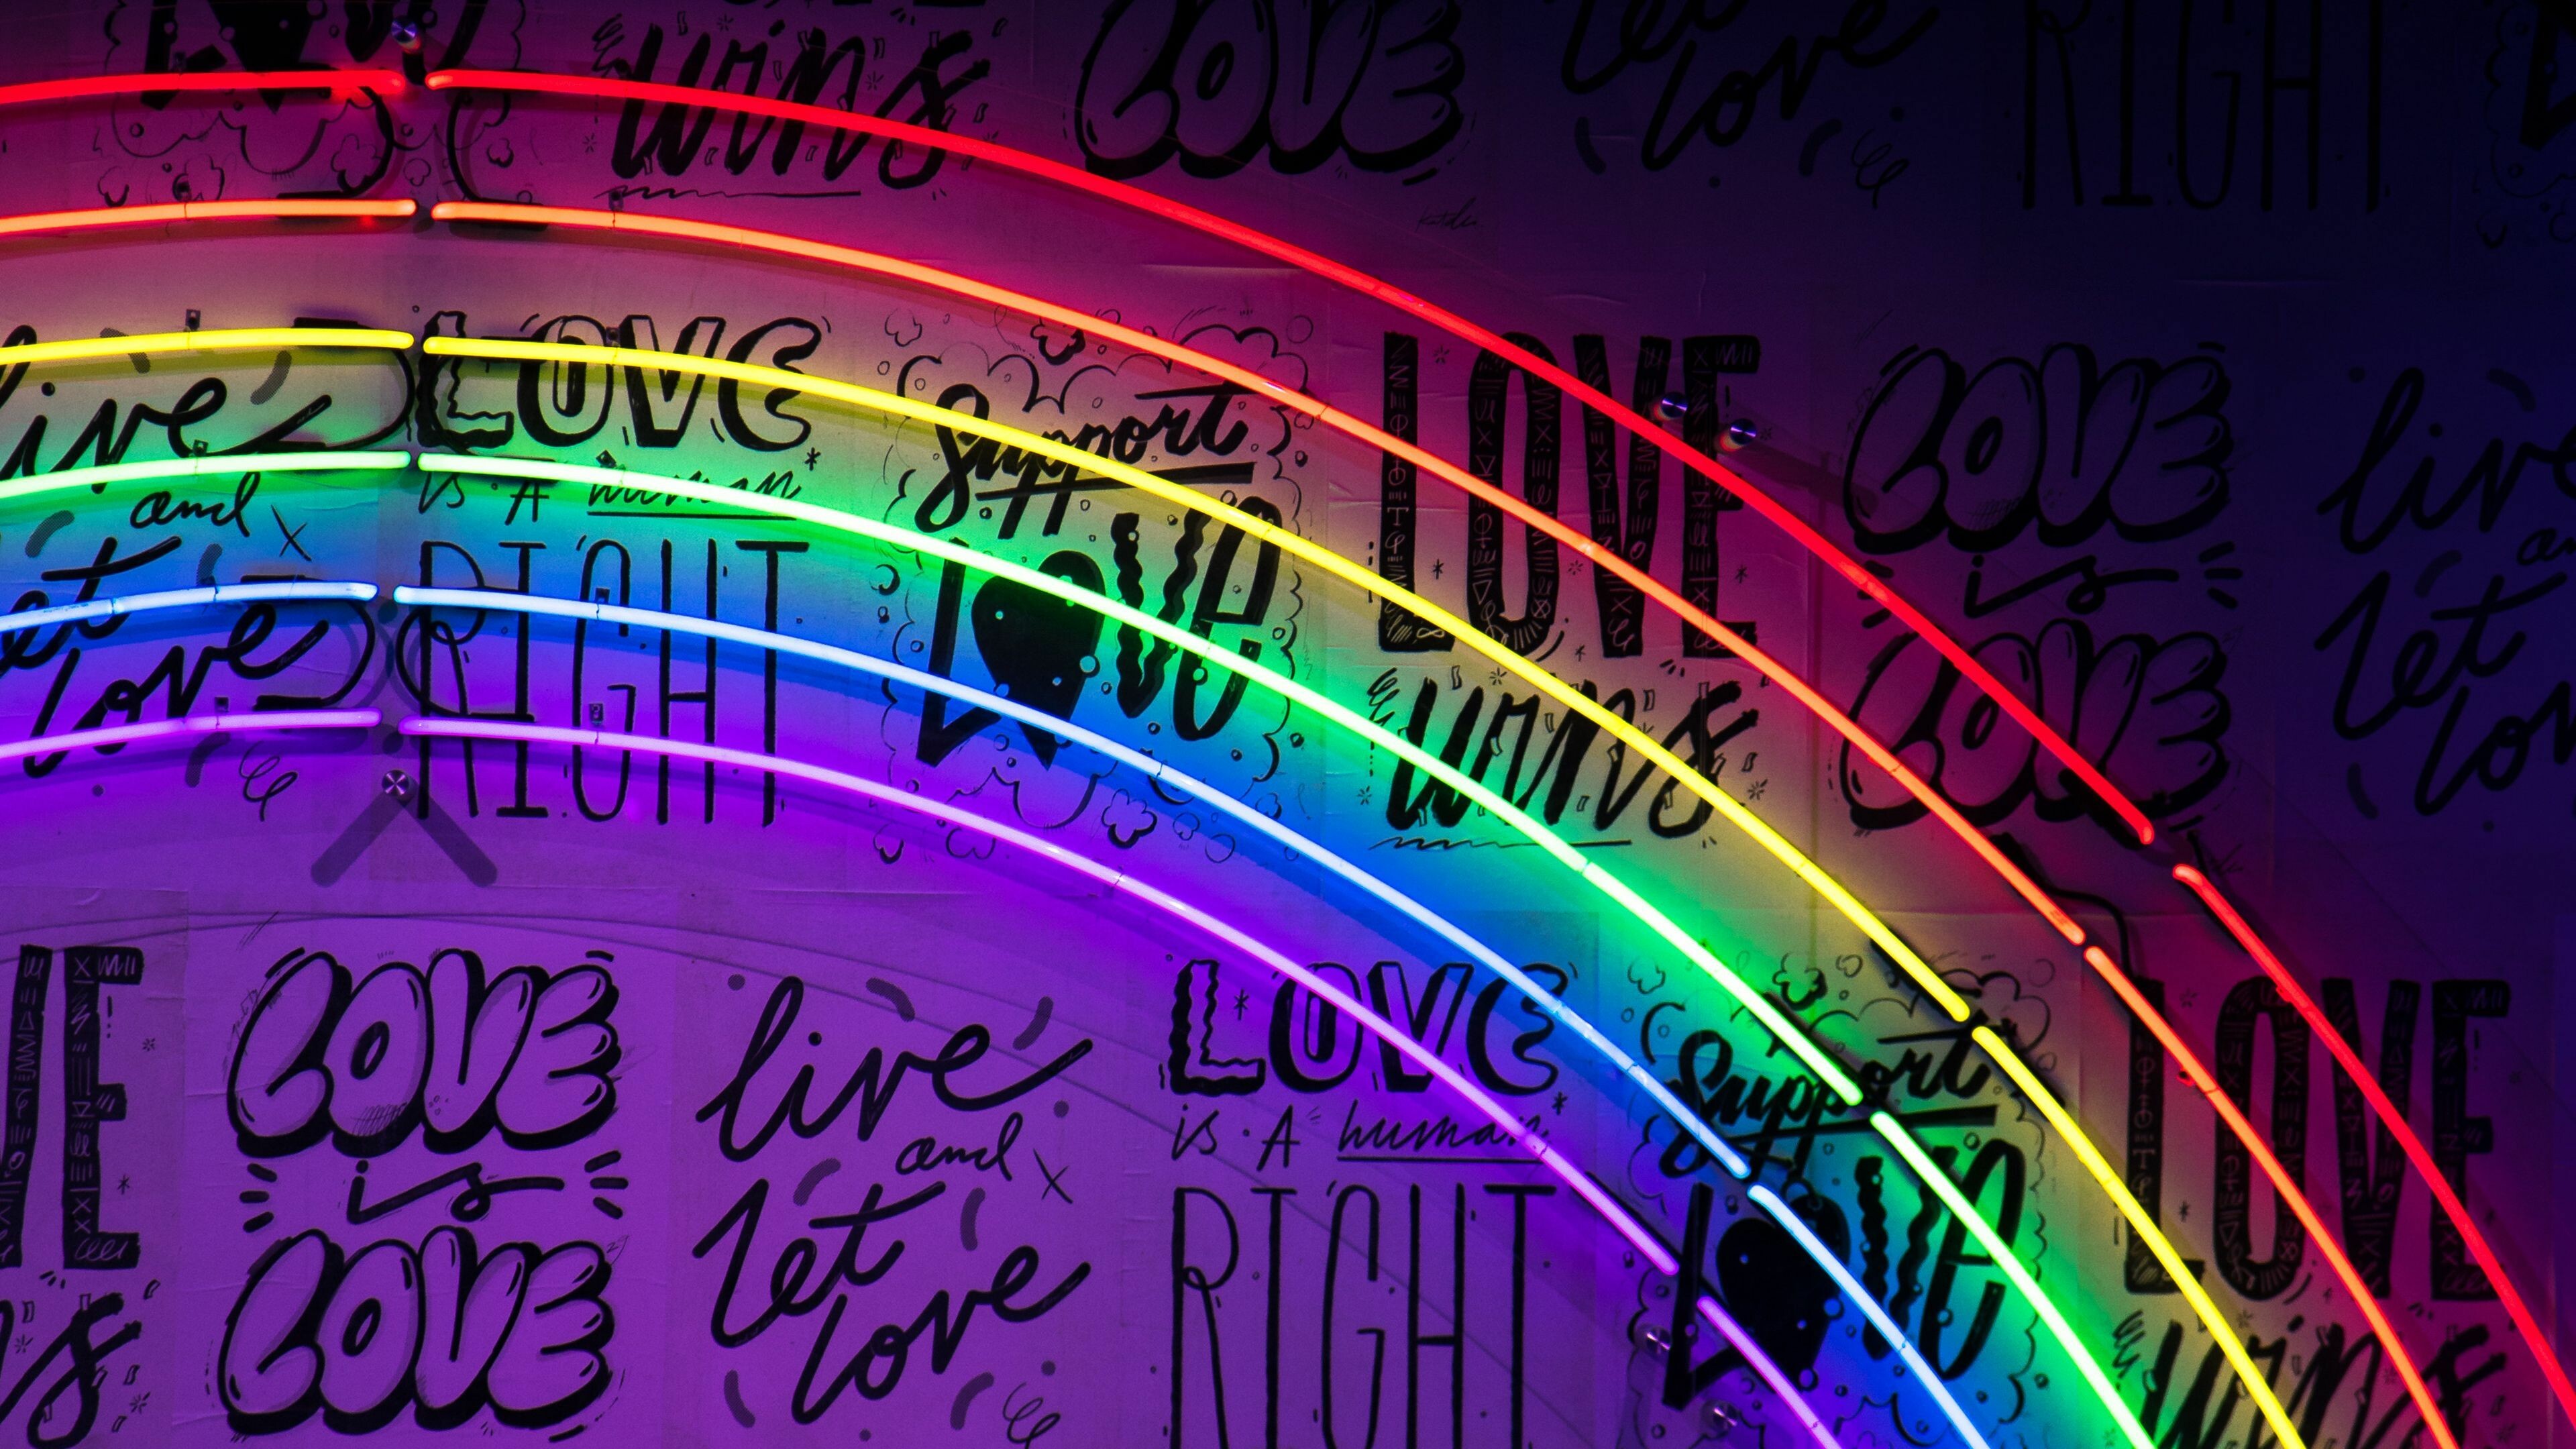 Rainbow Colors: Neon shades, Multicolored installation, Art. 3840x2160 4K Background.